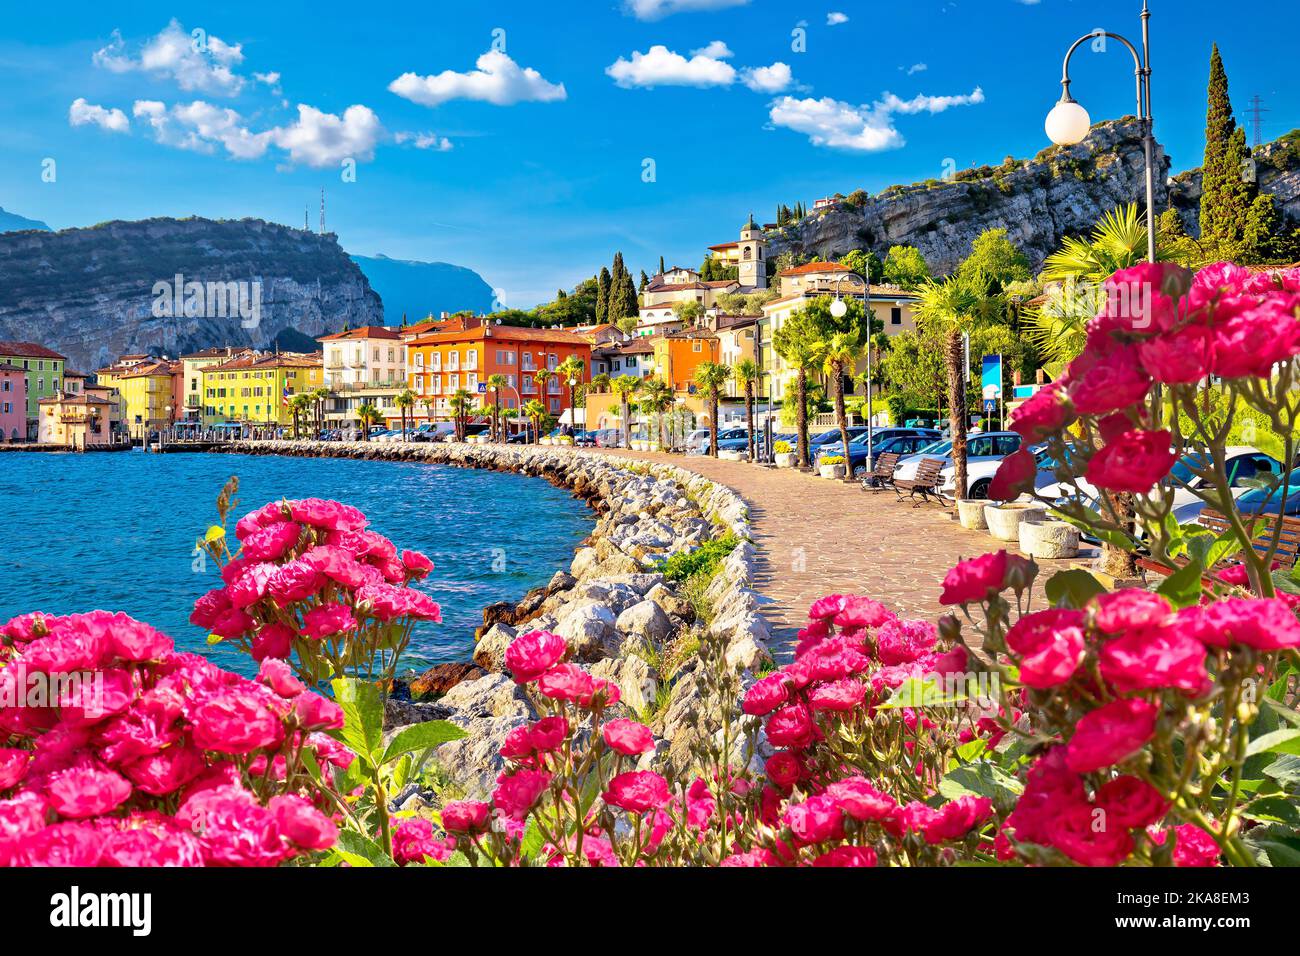 Colorful town of Torbole on Lago di Garda waterfront view, Trentino Alto Adige region of Italy Stock Photo